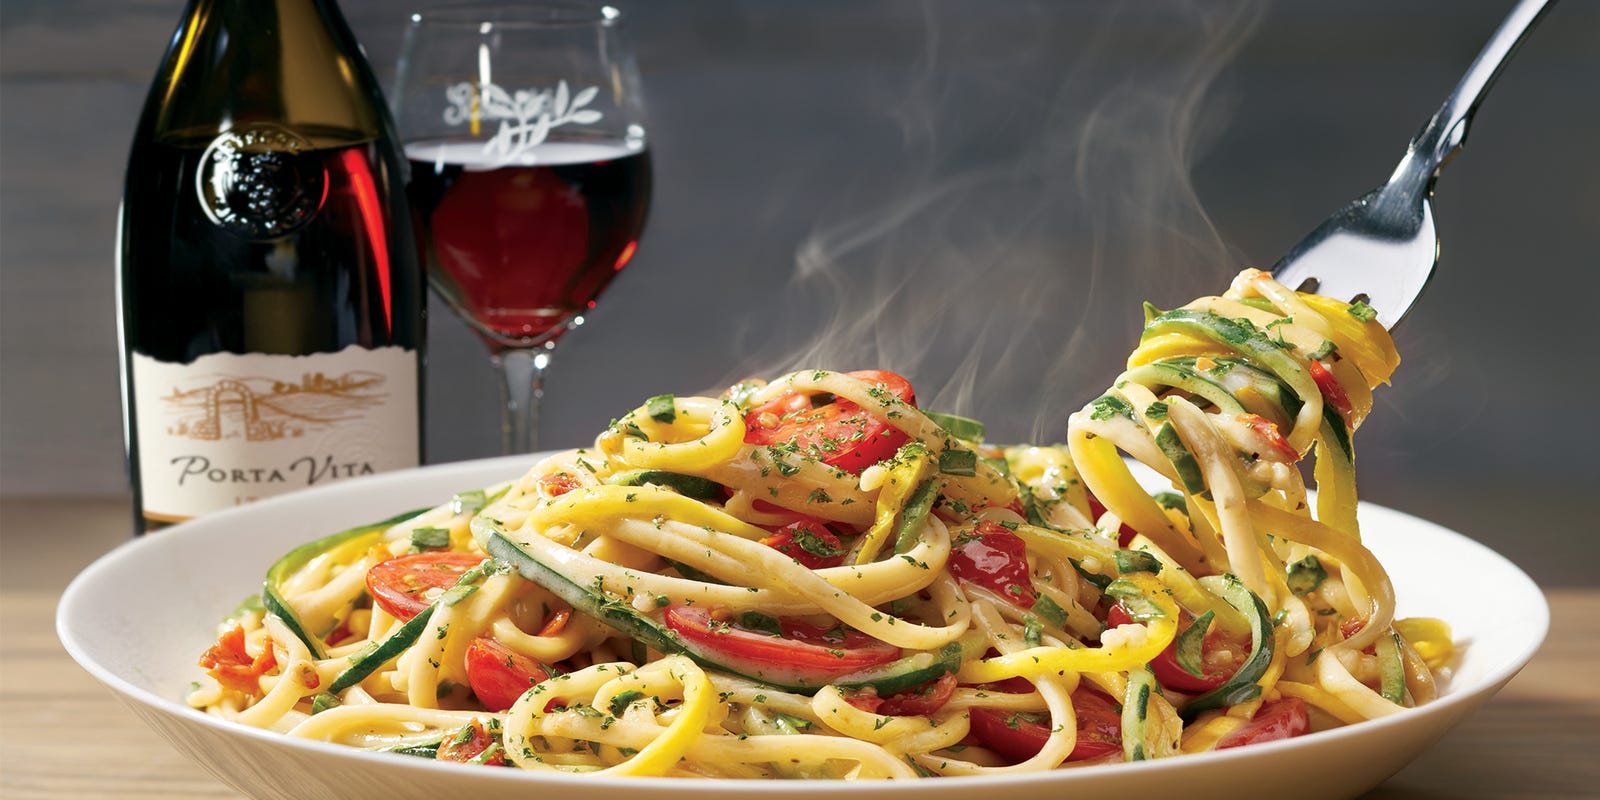 Olive Garden Adds Lower Calorie Mediterranean Dishes To Their Menus